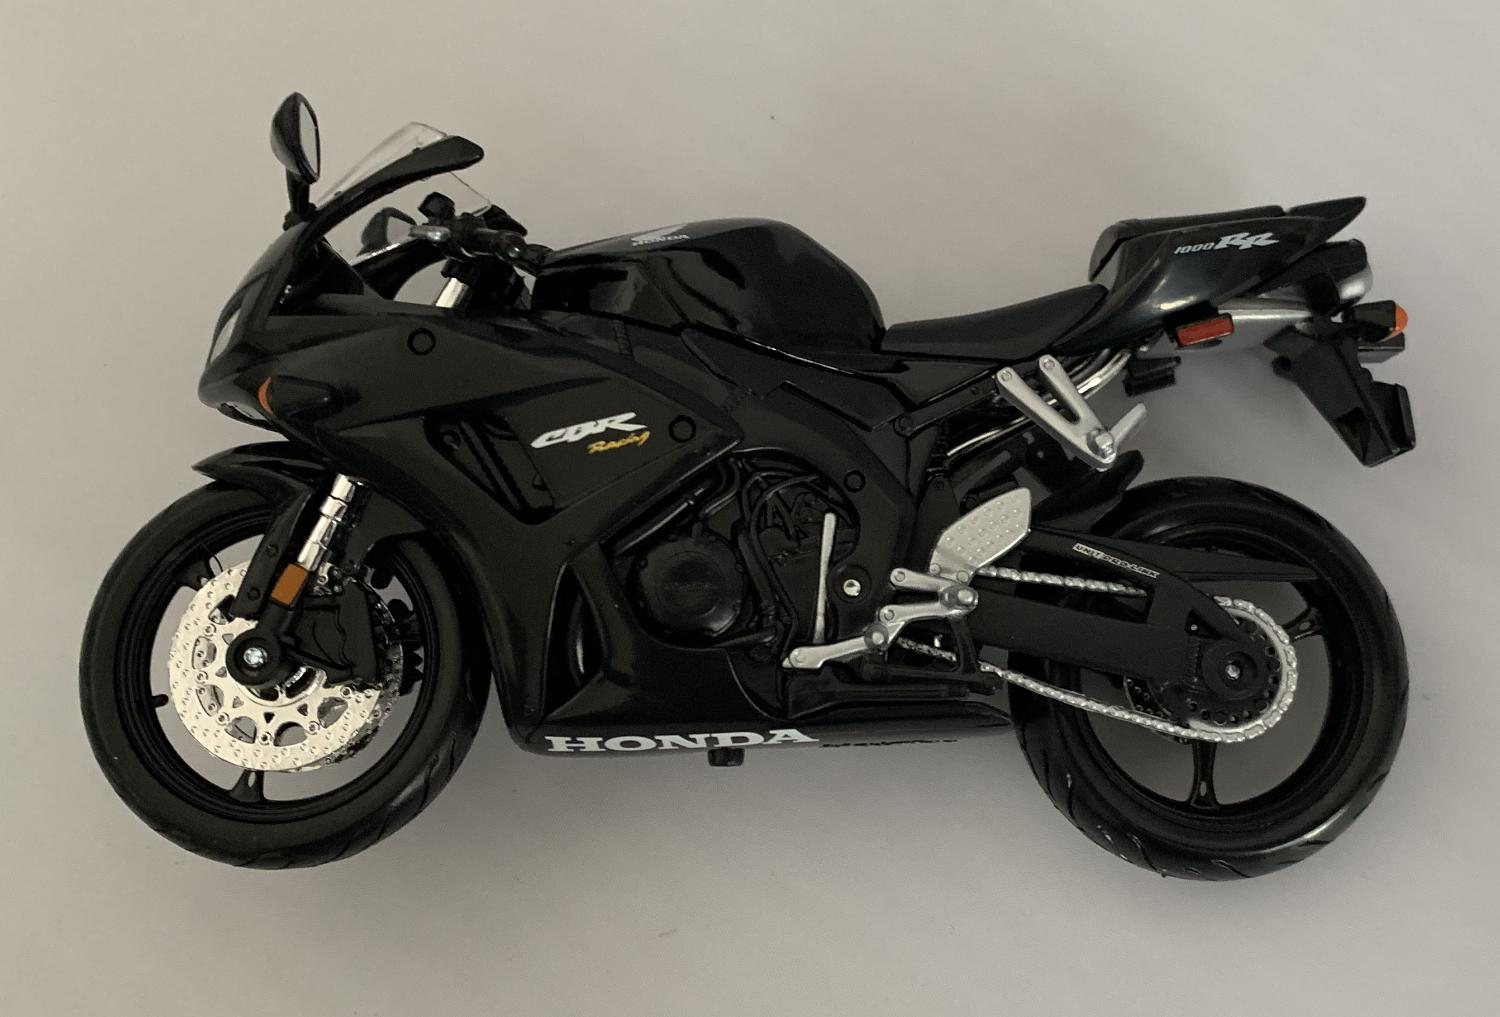 Honda CBR1000RR motorbike in black 1:12 scale model from Maisto